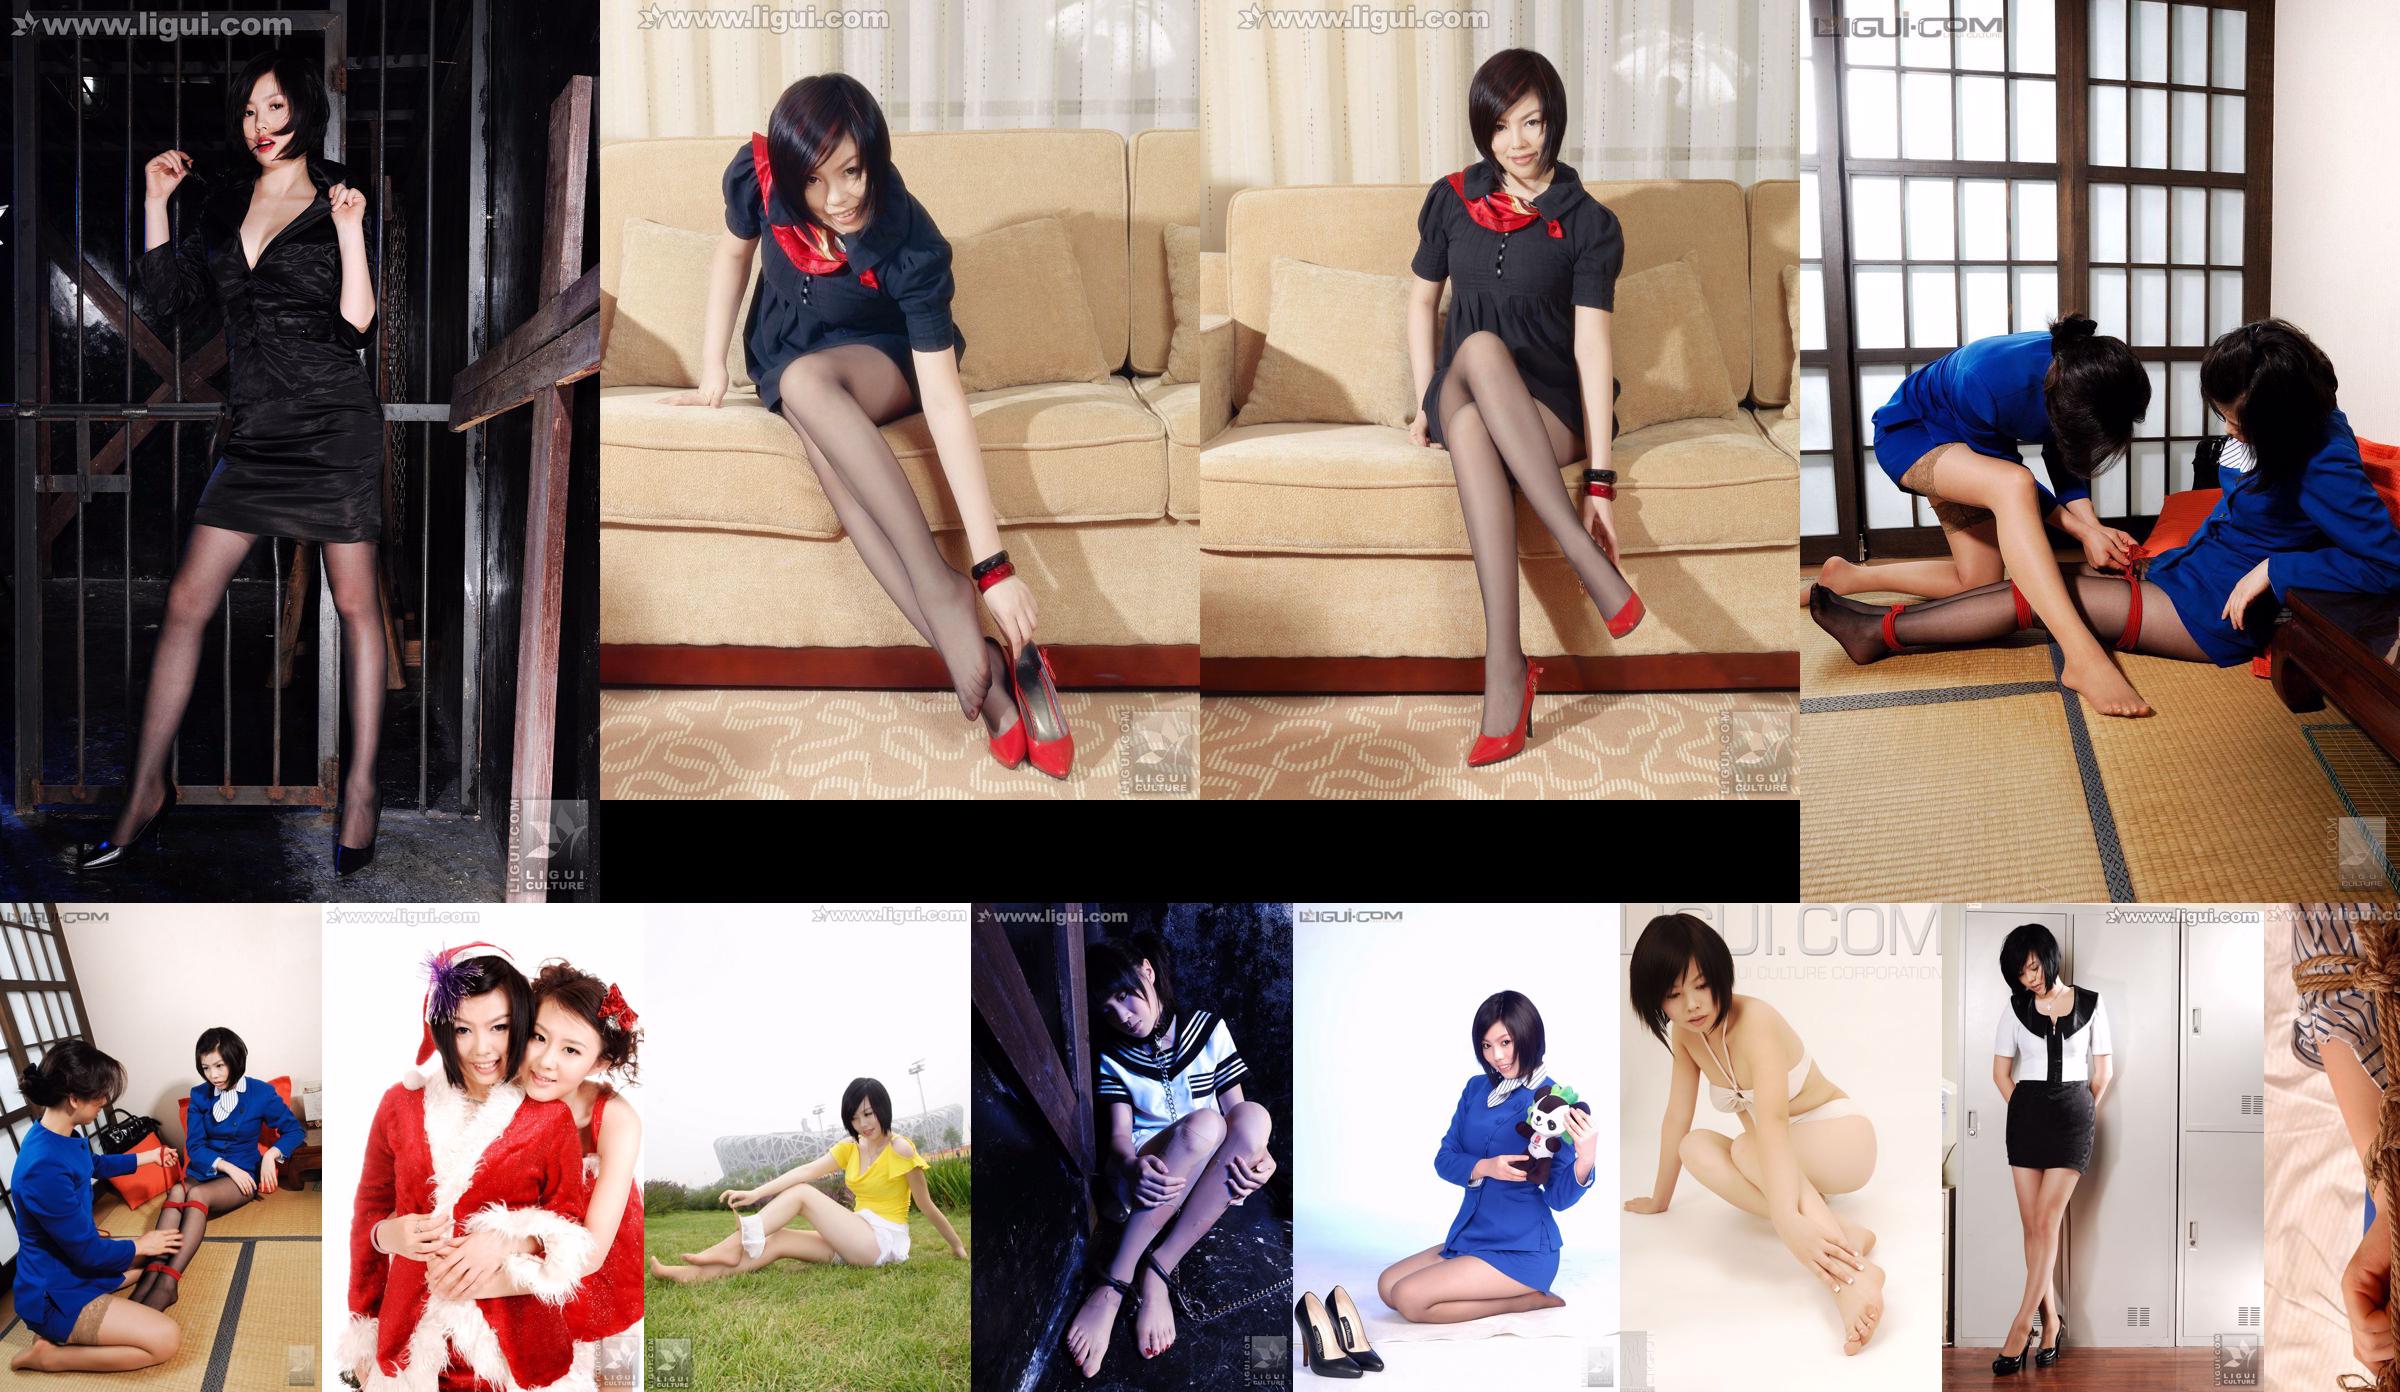 Model "Cute Pajama Foot Show" [Ligui LiGui] Stockings Foot Photo Picture No.15c1fc Page 1